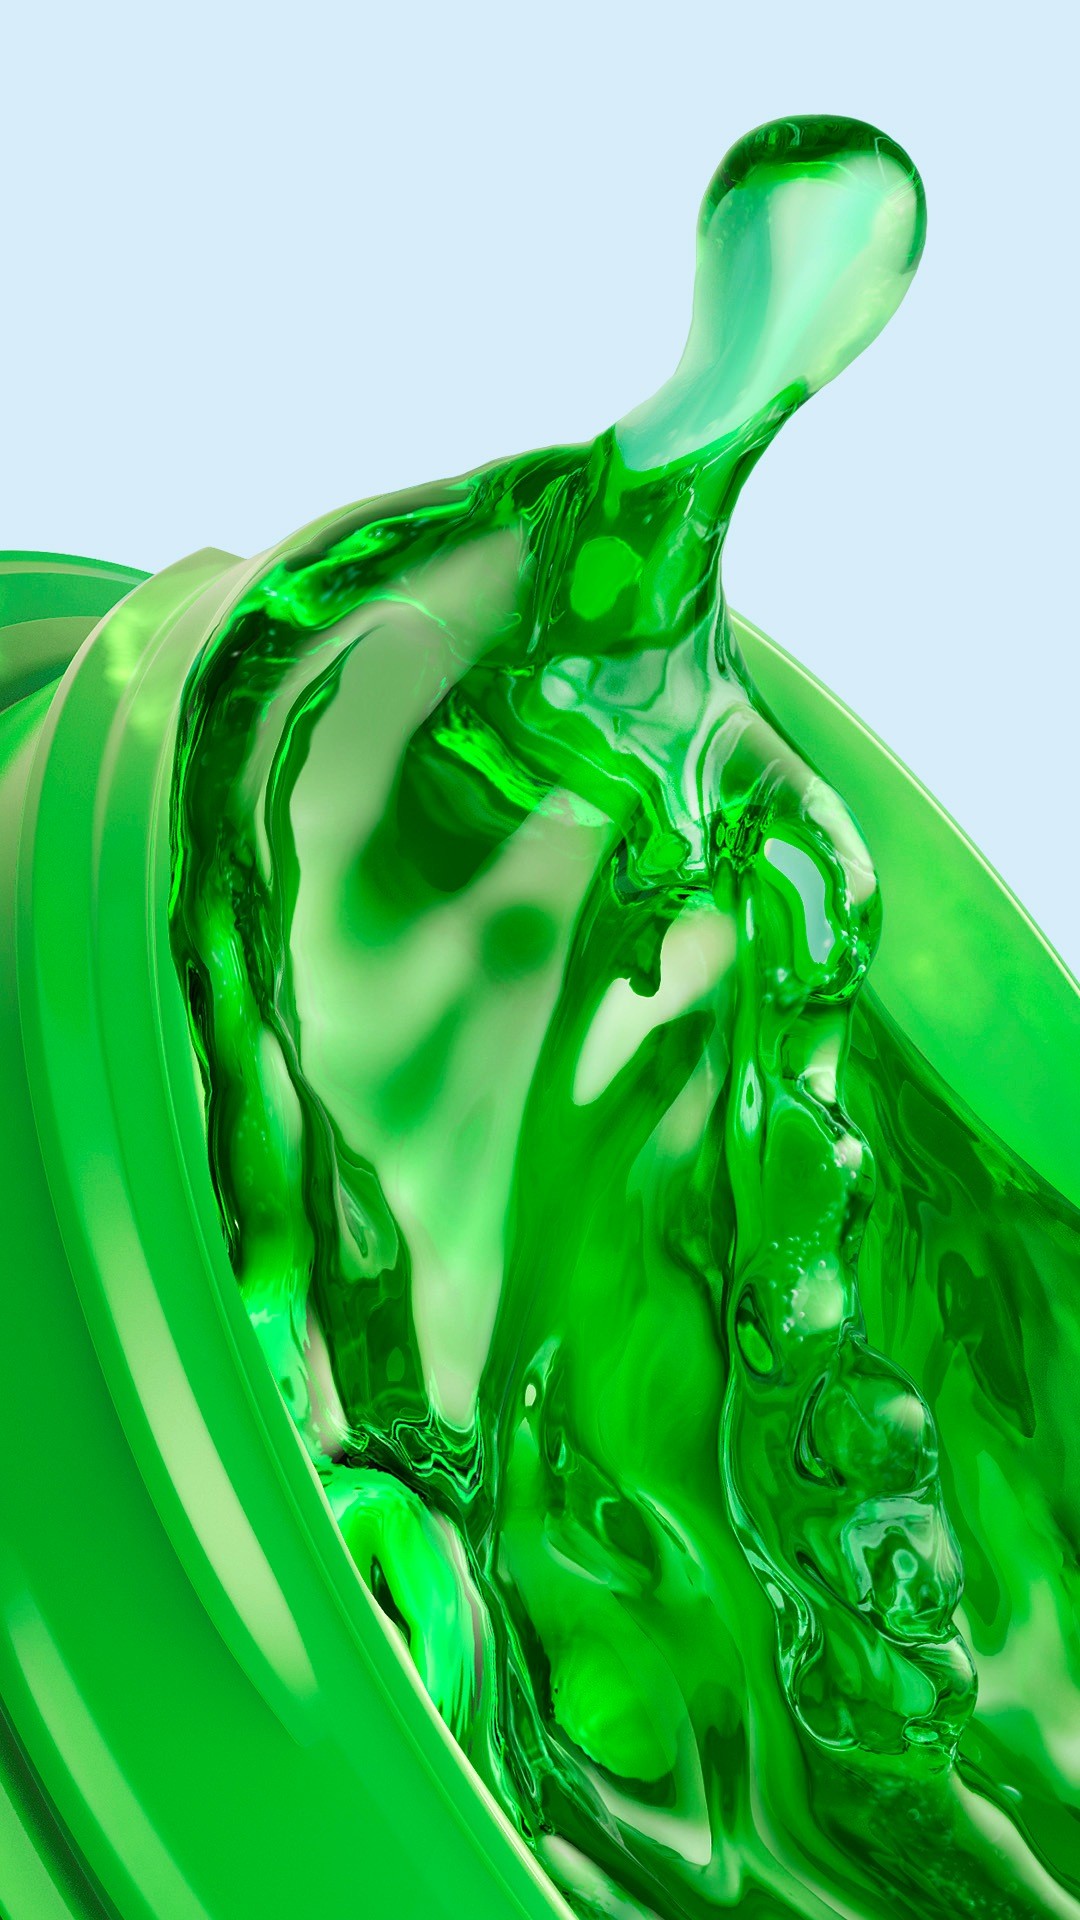 Wallpaper Green Liquid iPhone resolution 1080x1920